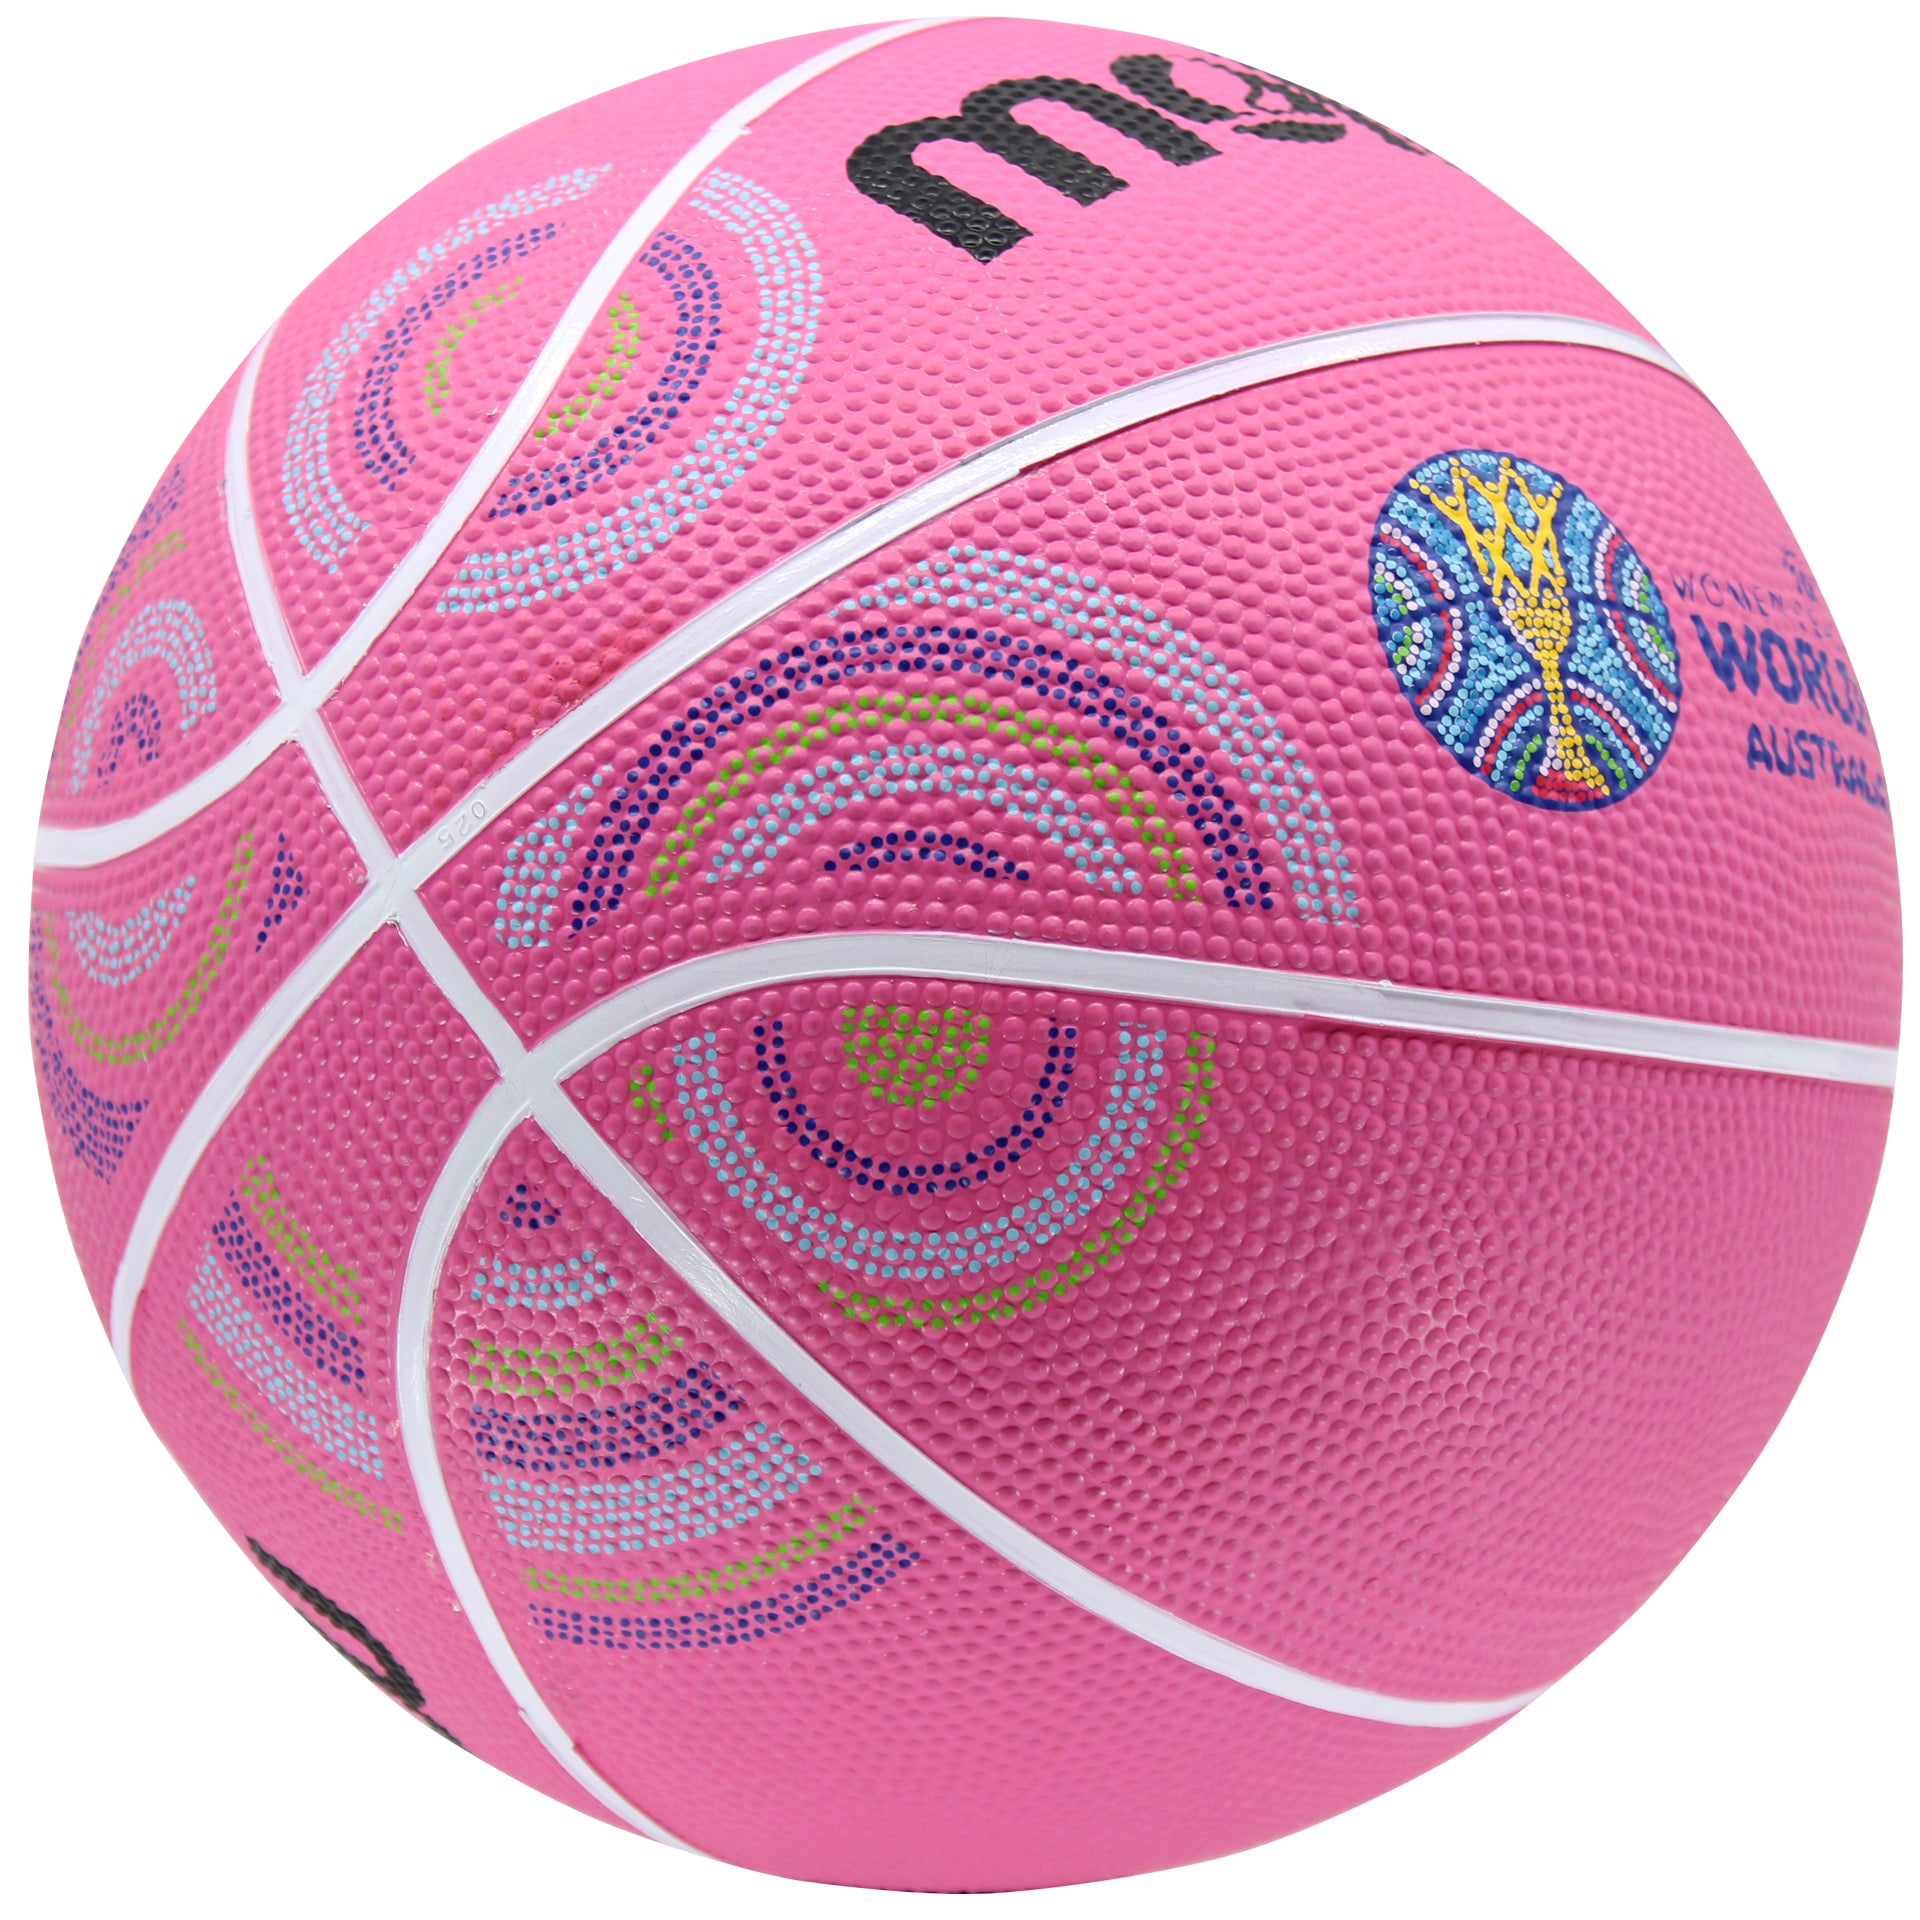 Kunde Dreh dich um Inlay pink basketball ball Apotheke Verbindung Hund